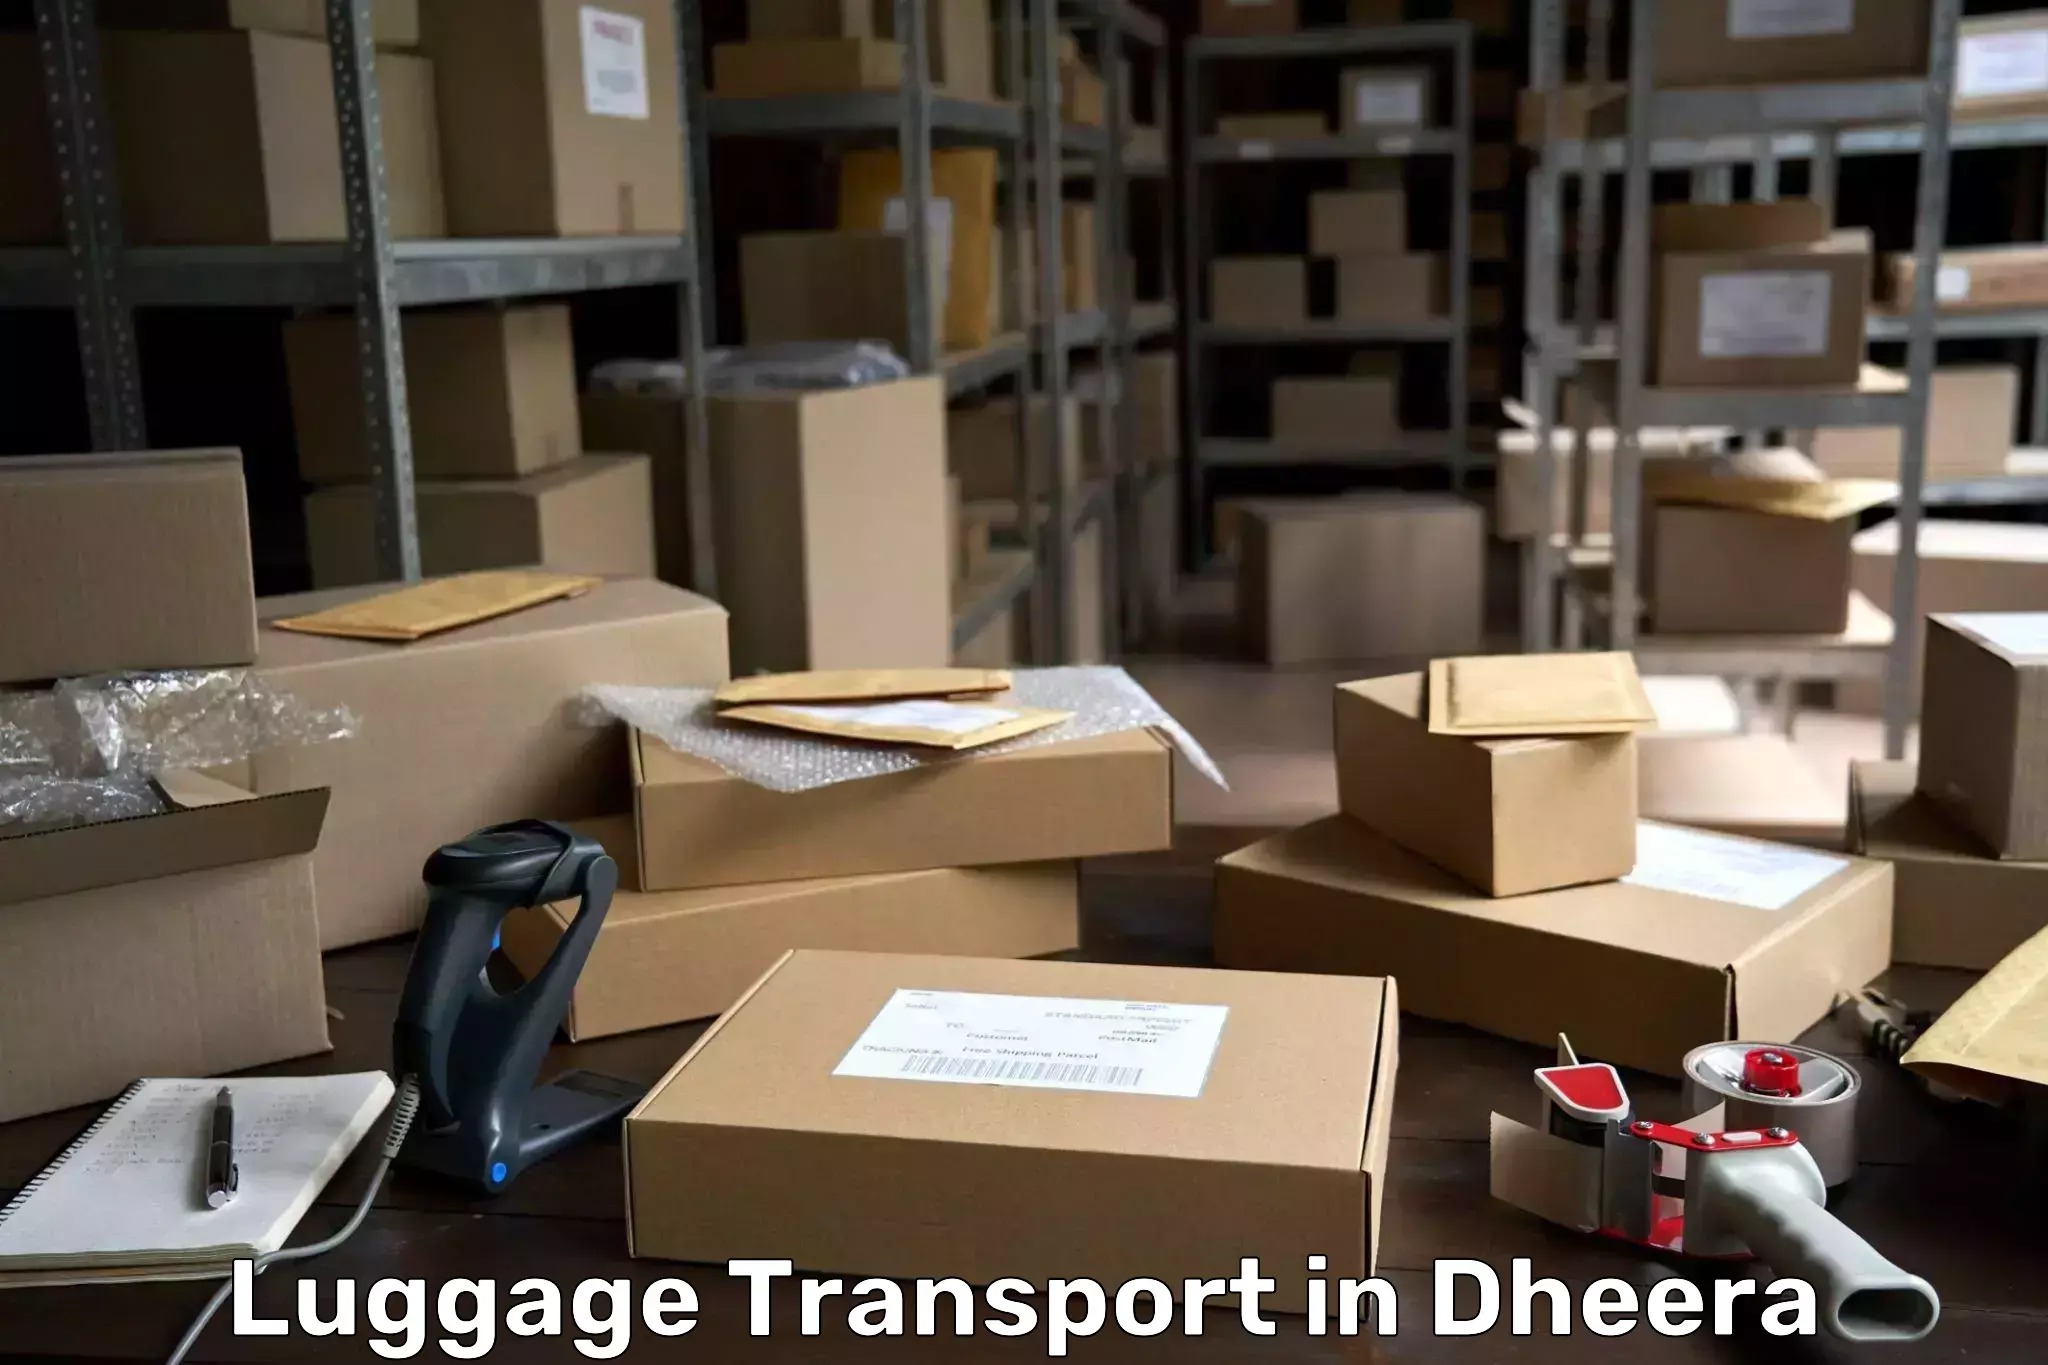 Luggage shipment processing in Dheera